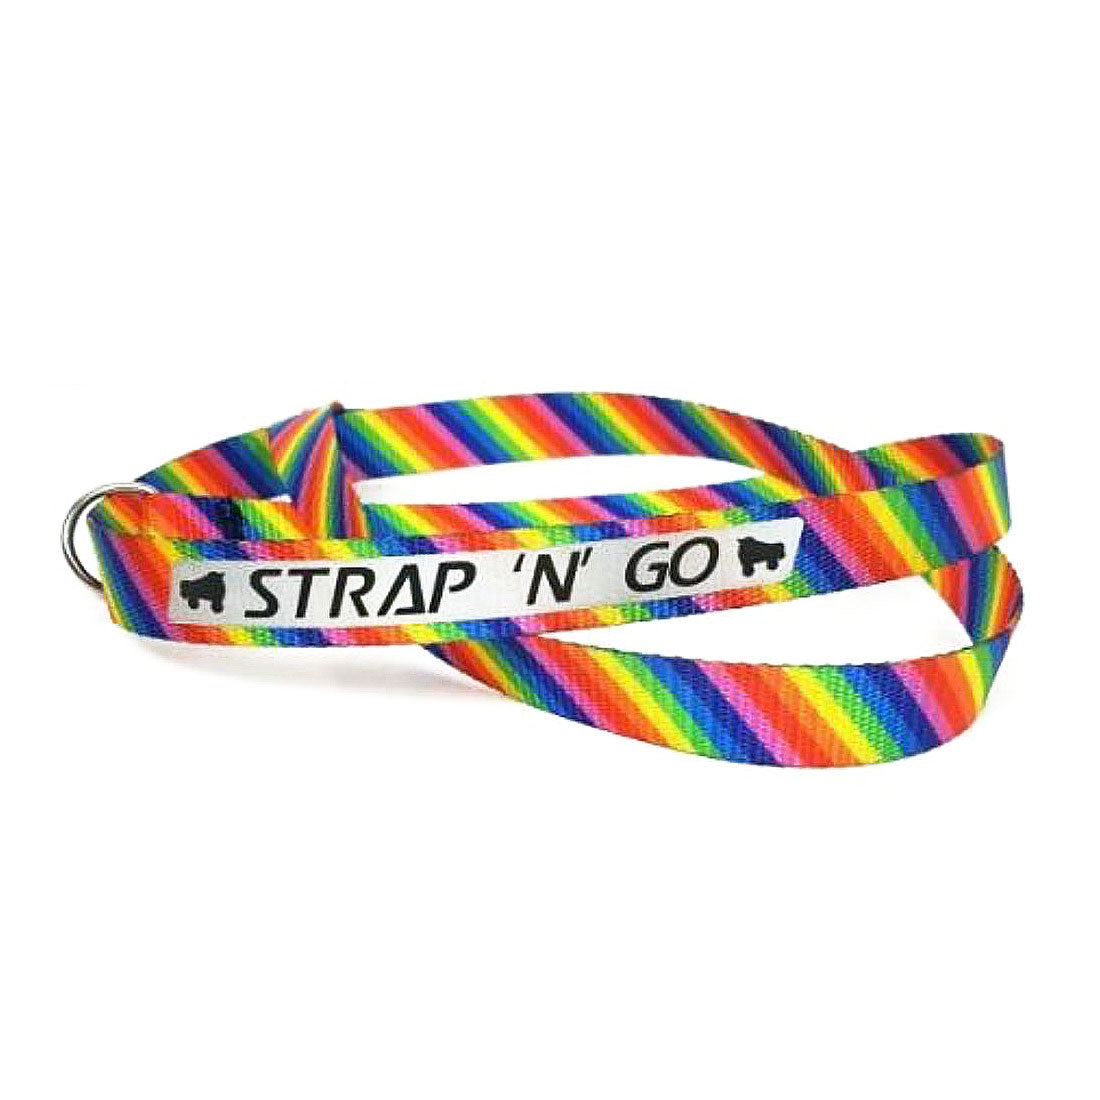 Strap N Go Skate Noose/Leash - Patterns Rainbow Stripe Roller Skate Accessories